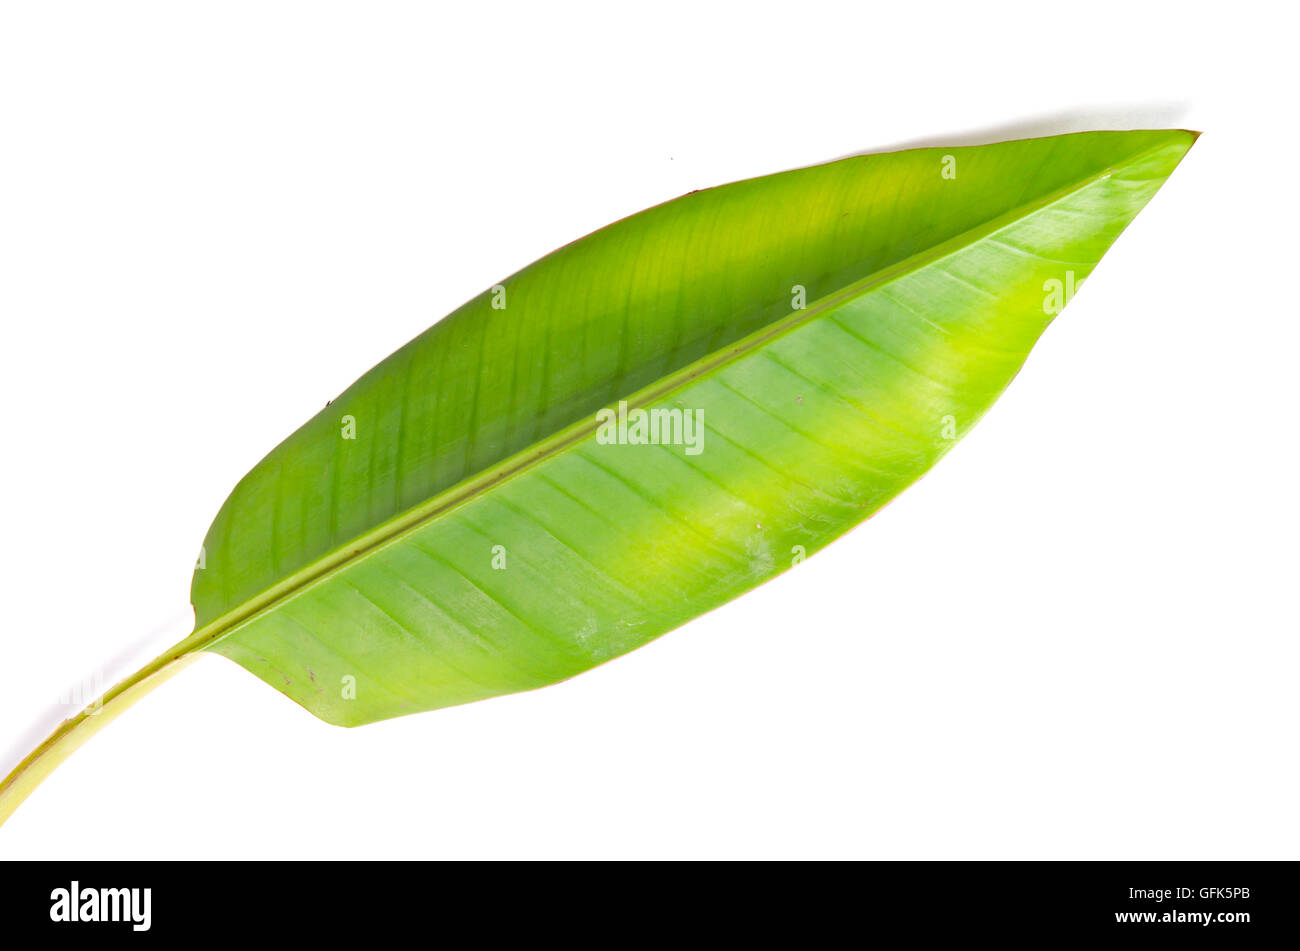 Banana (Other names are Musa banana acuminata, Musa balbisiana, and Musa x paradisiaca) leaf isolated on white background Stock Photo